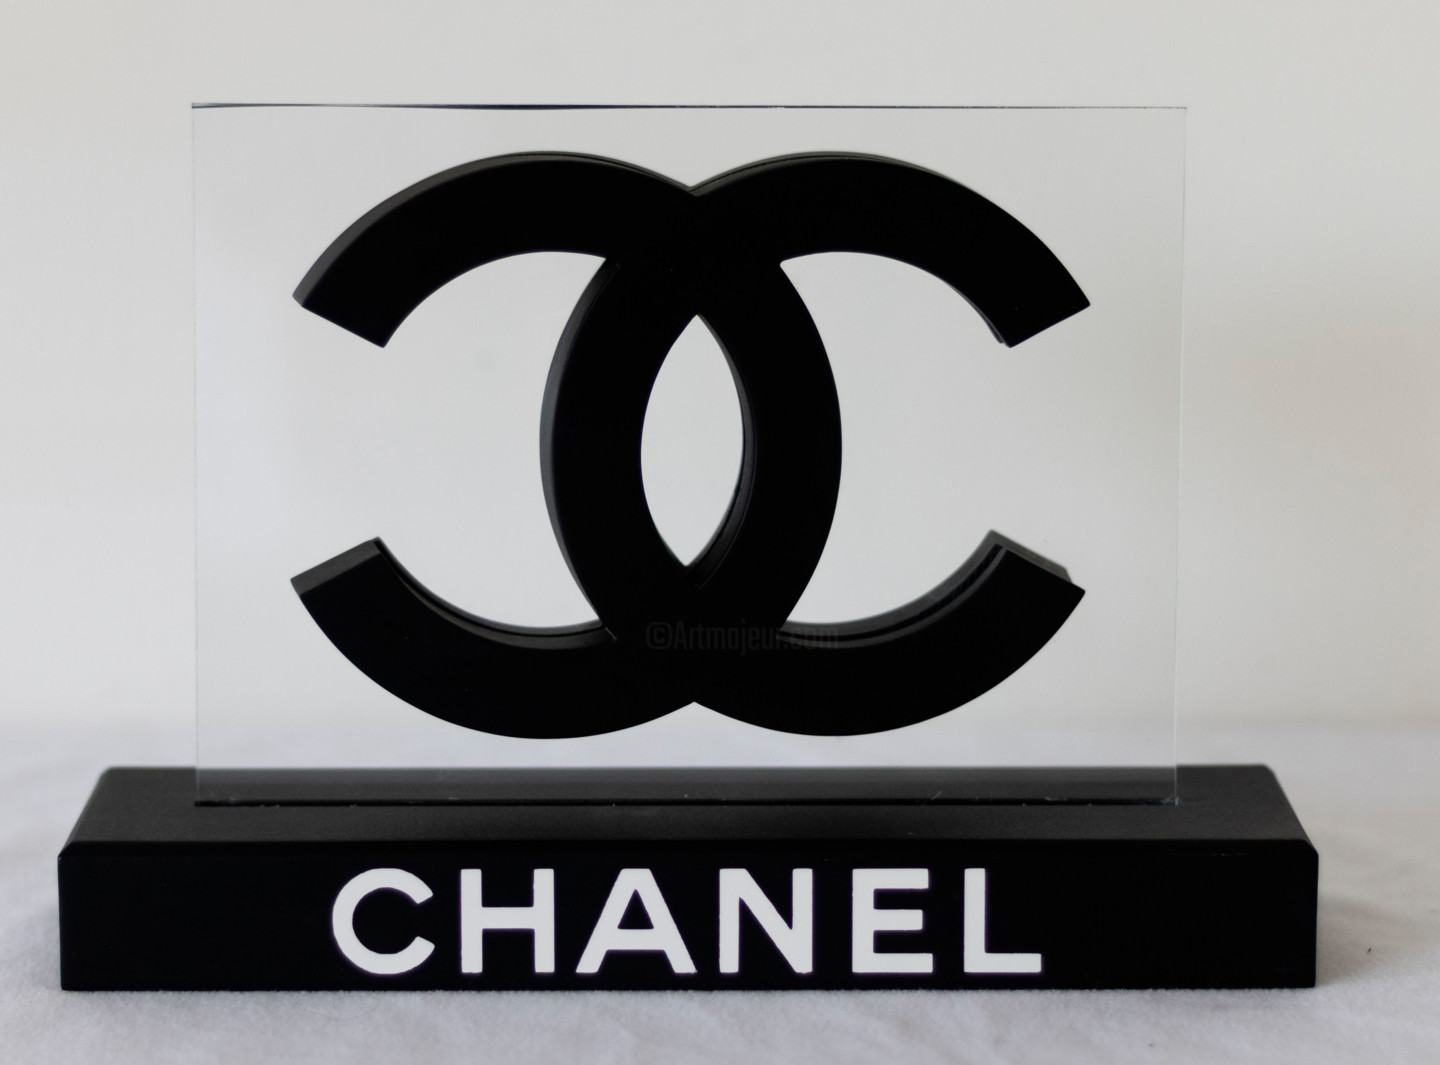 Chanel Glass, Sculpture by Flavien Mandon